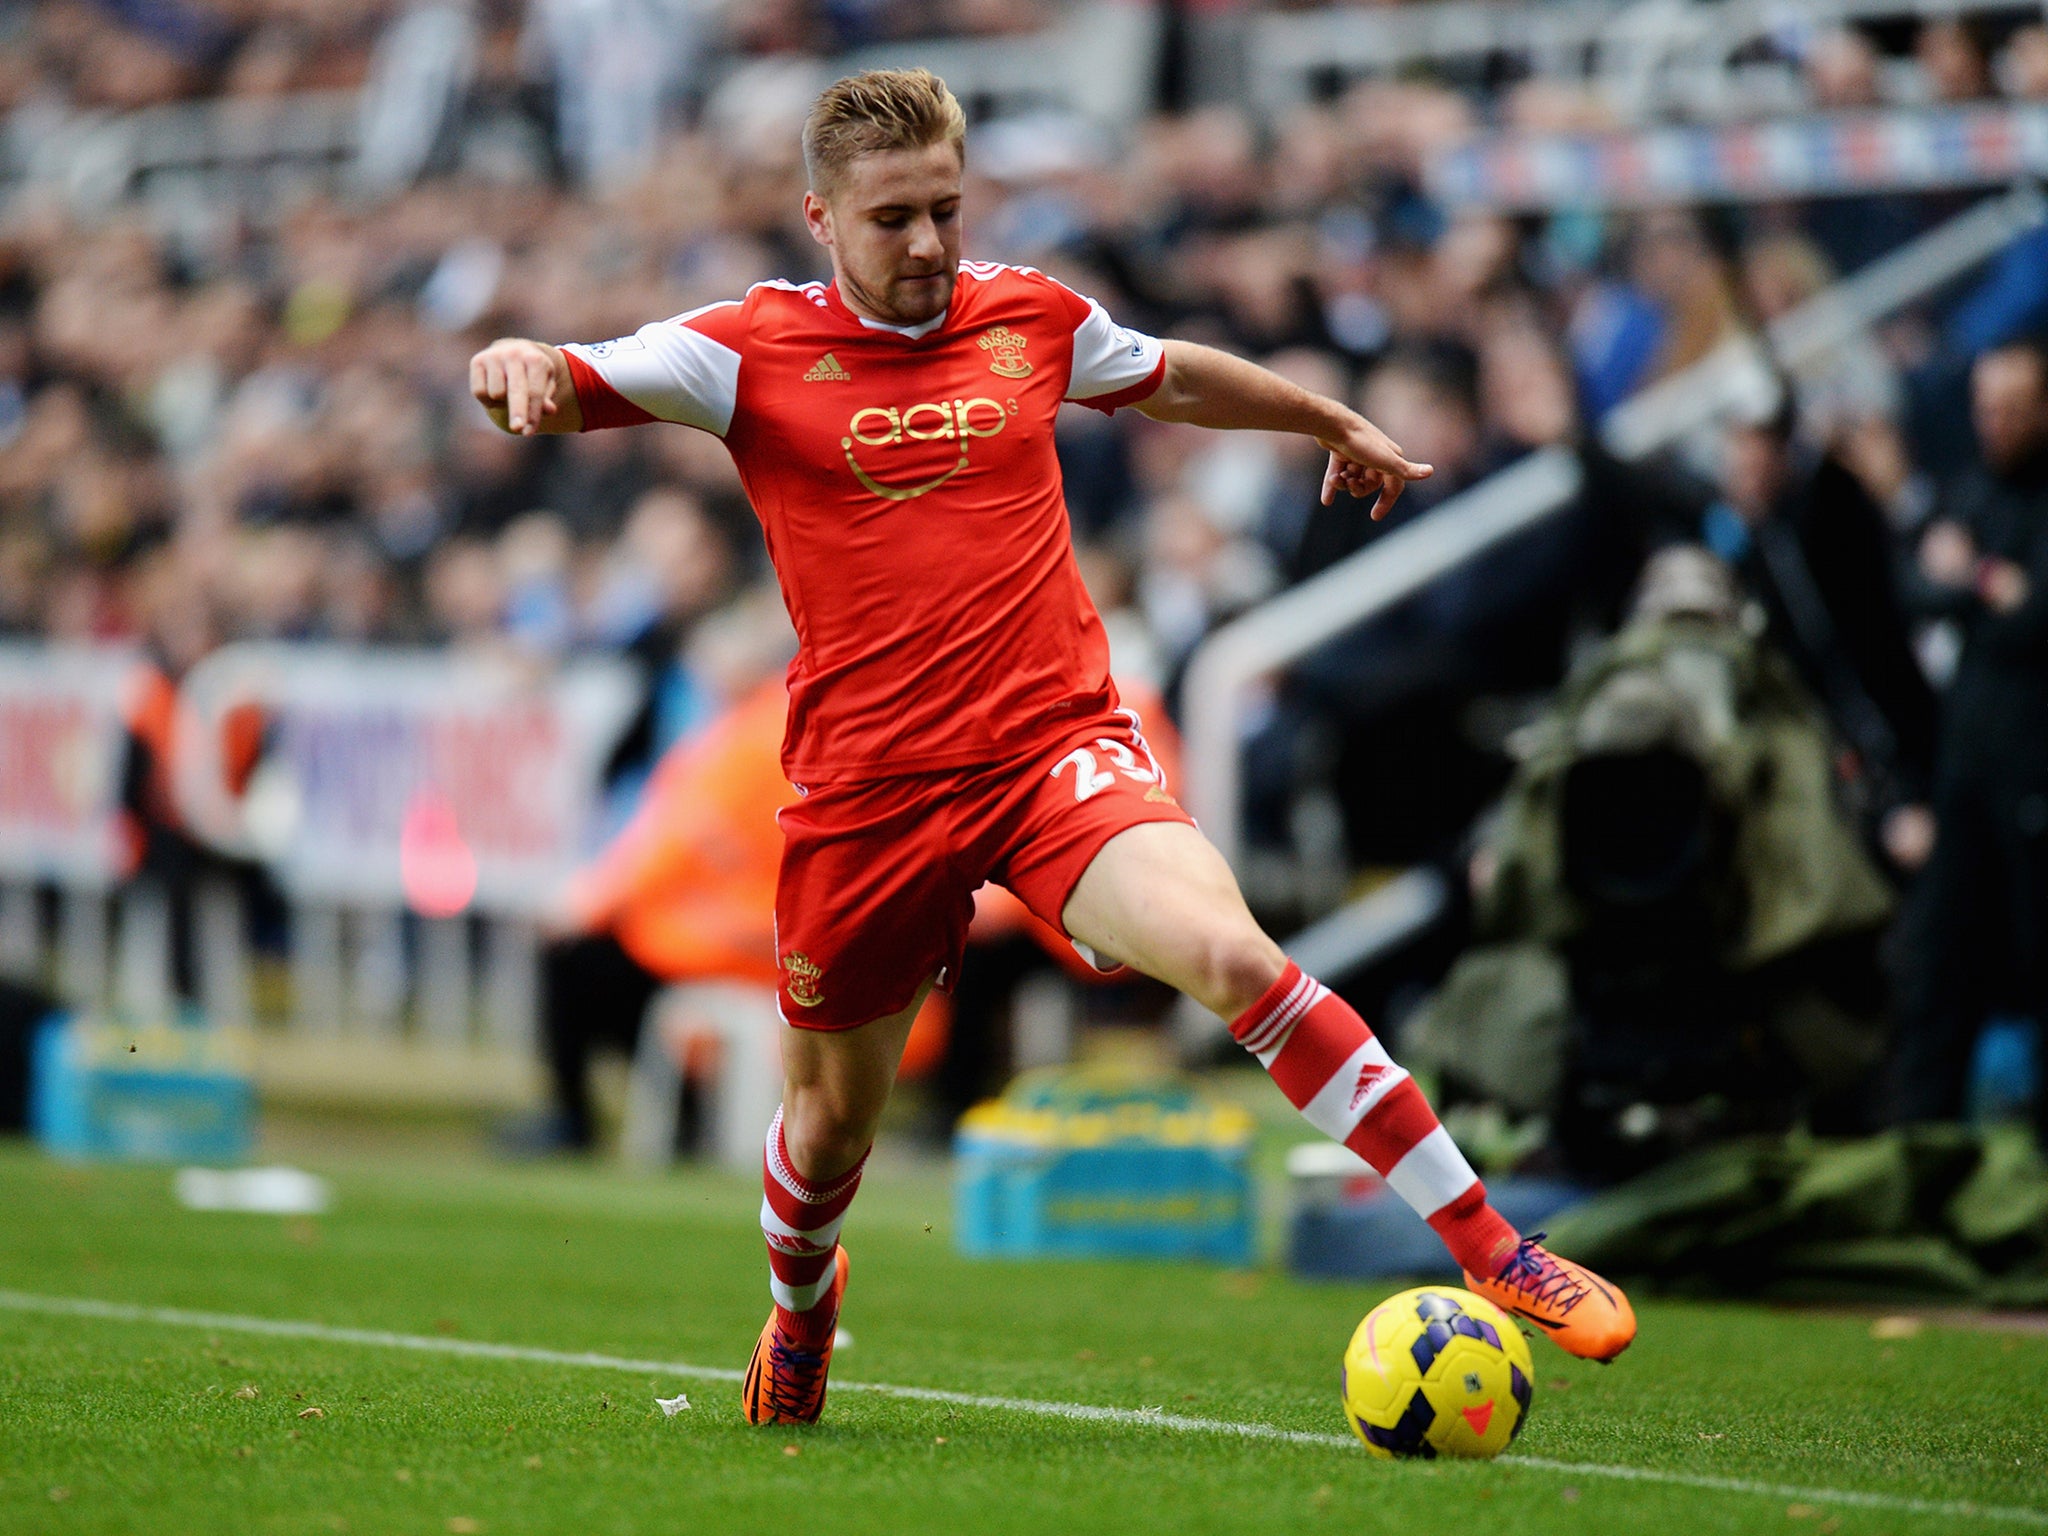 Southampton's highly rated left-back Luke Shaw